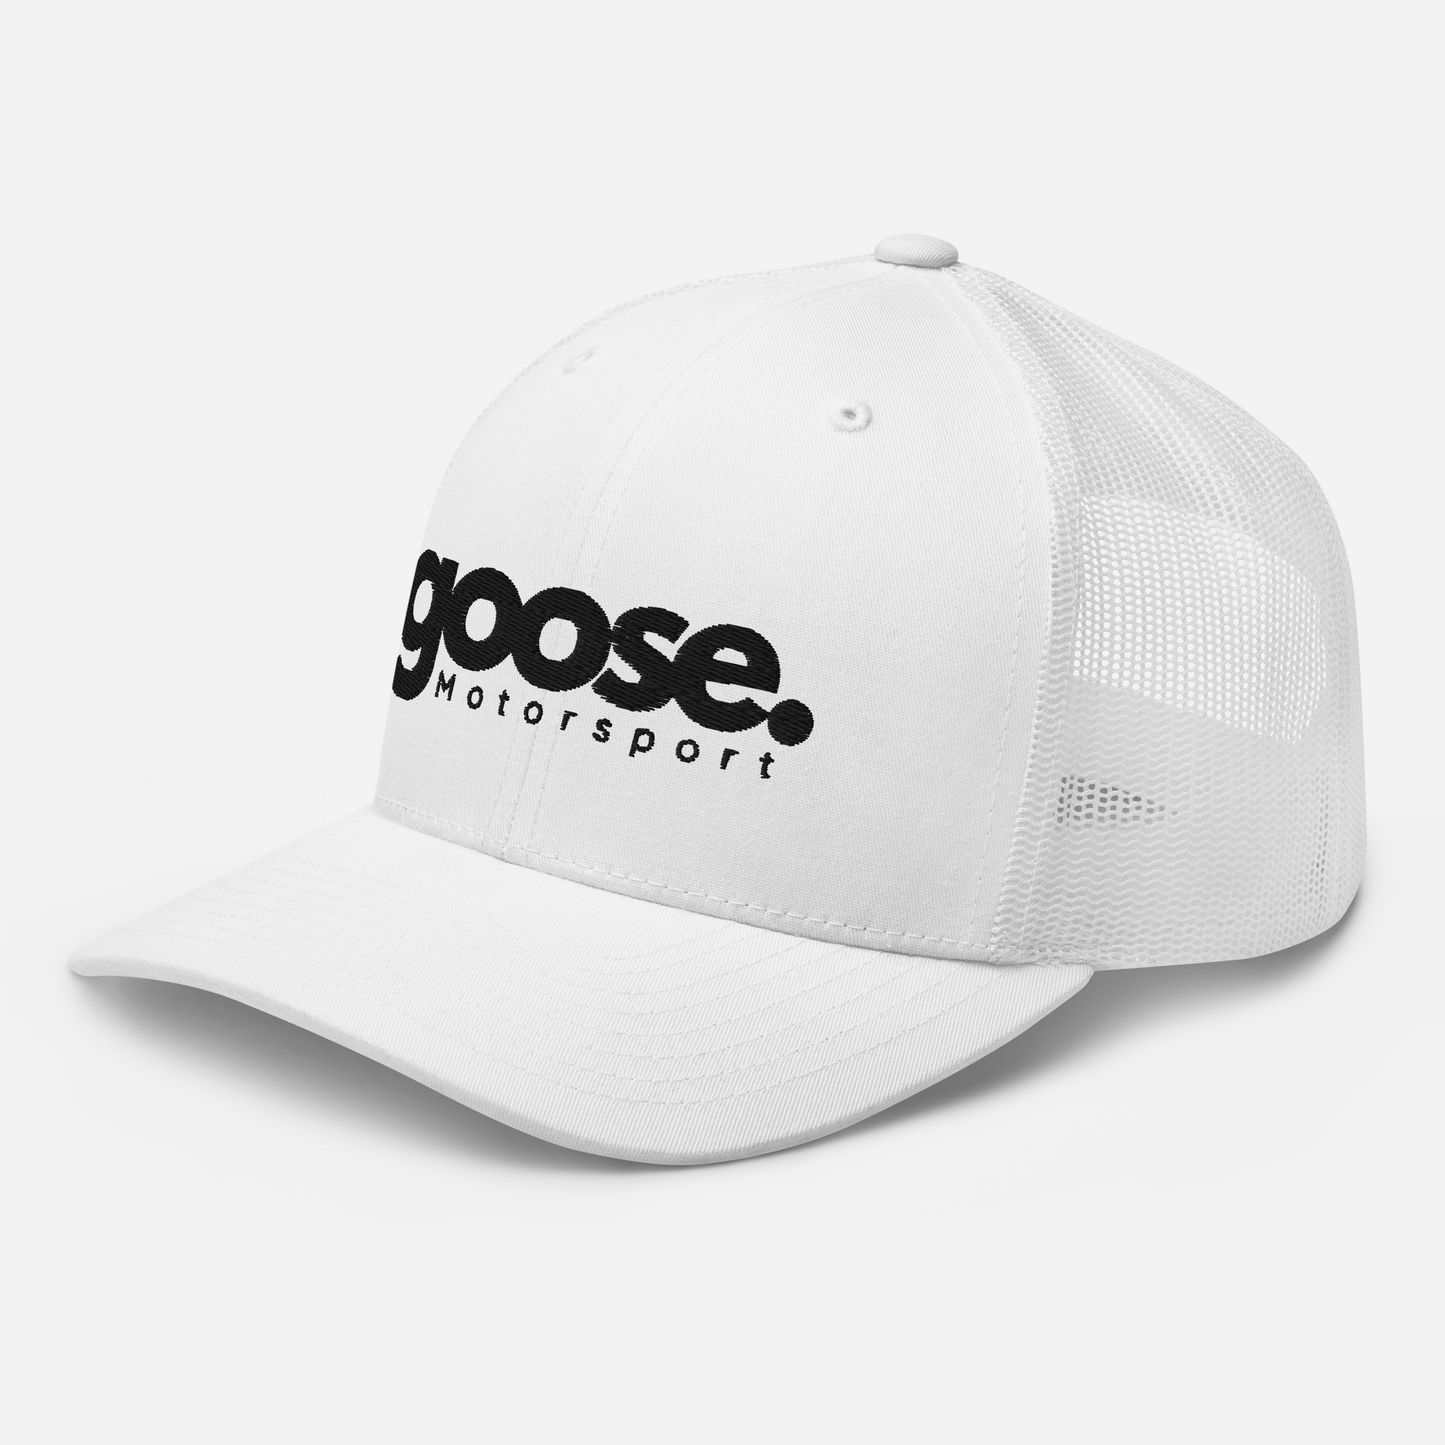 Goose Motorsports Team Hat